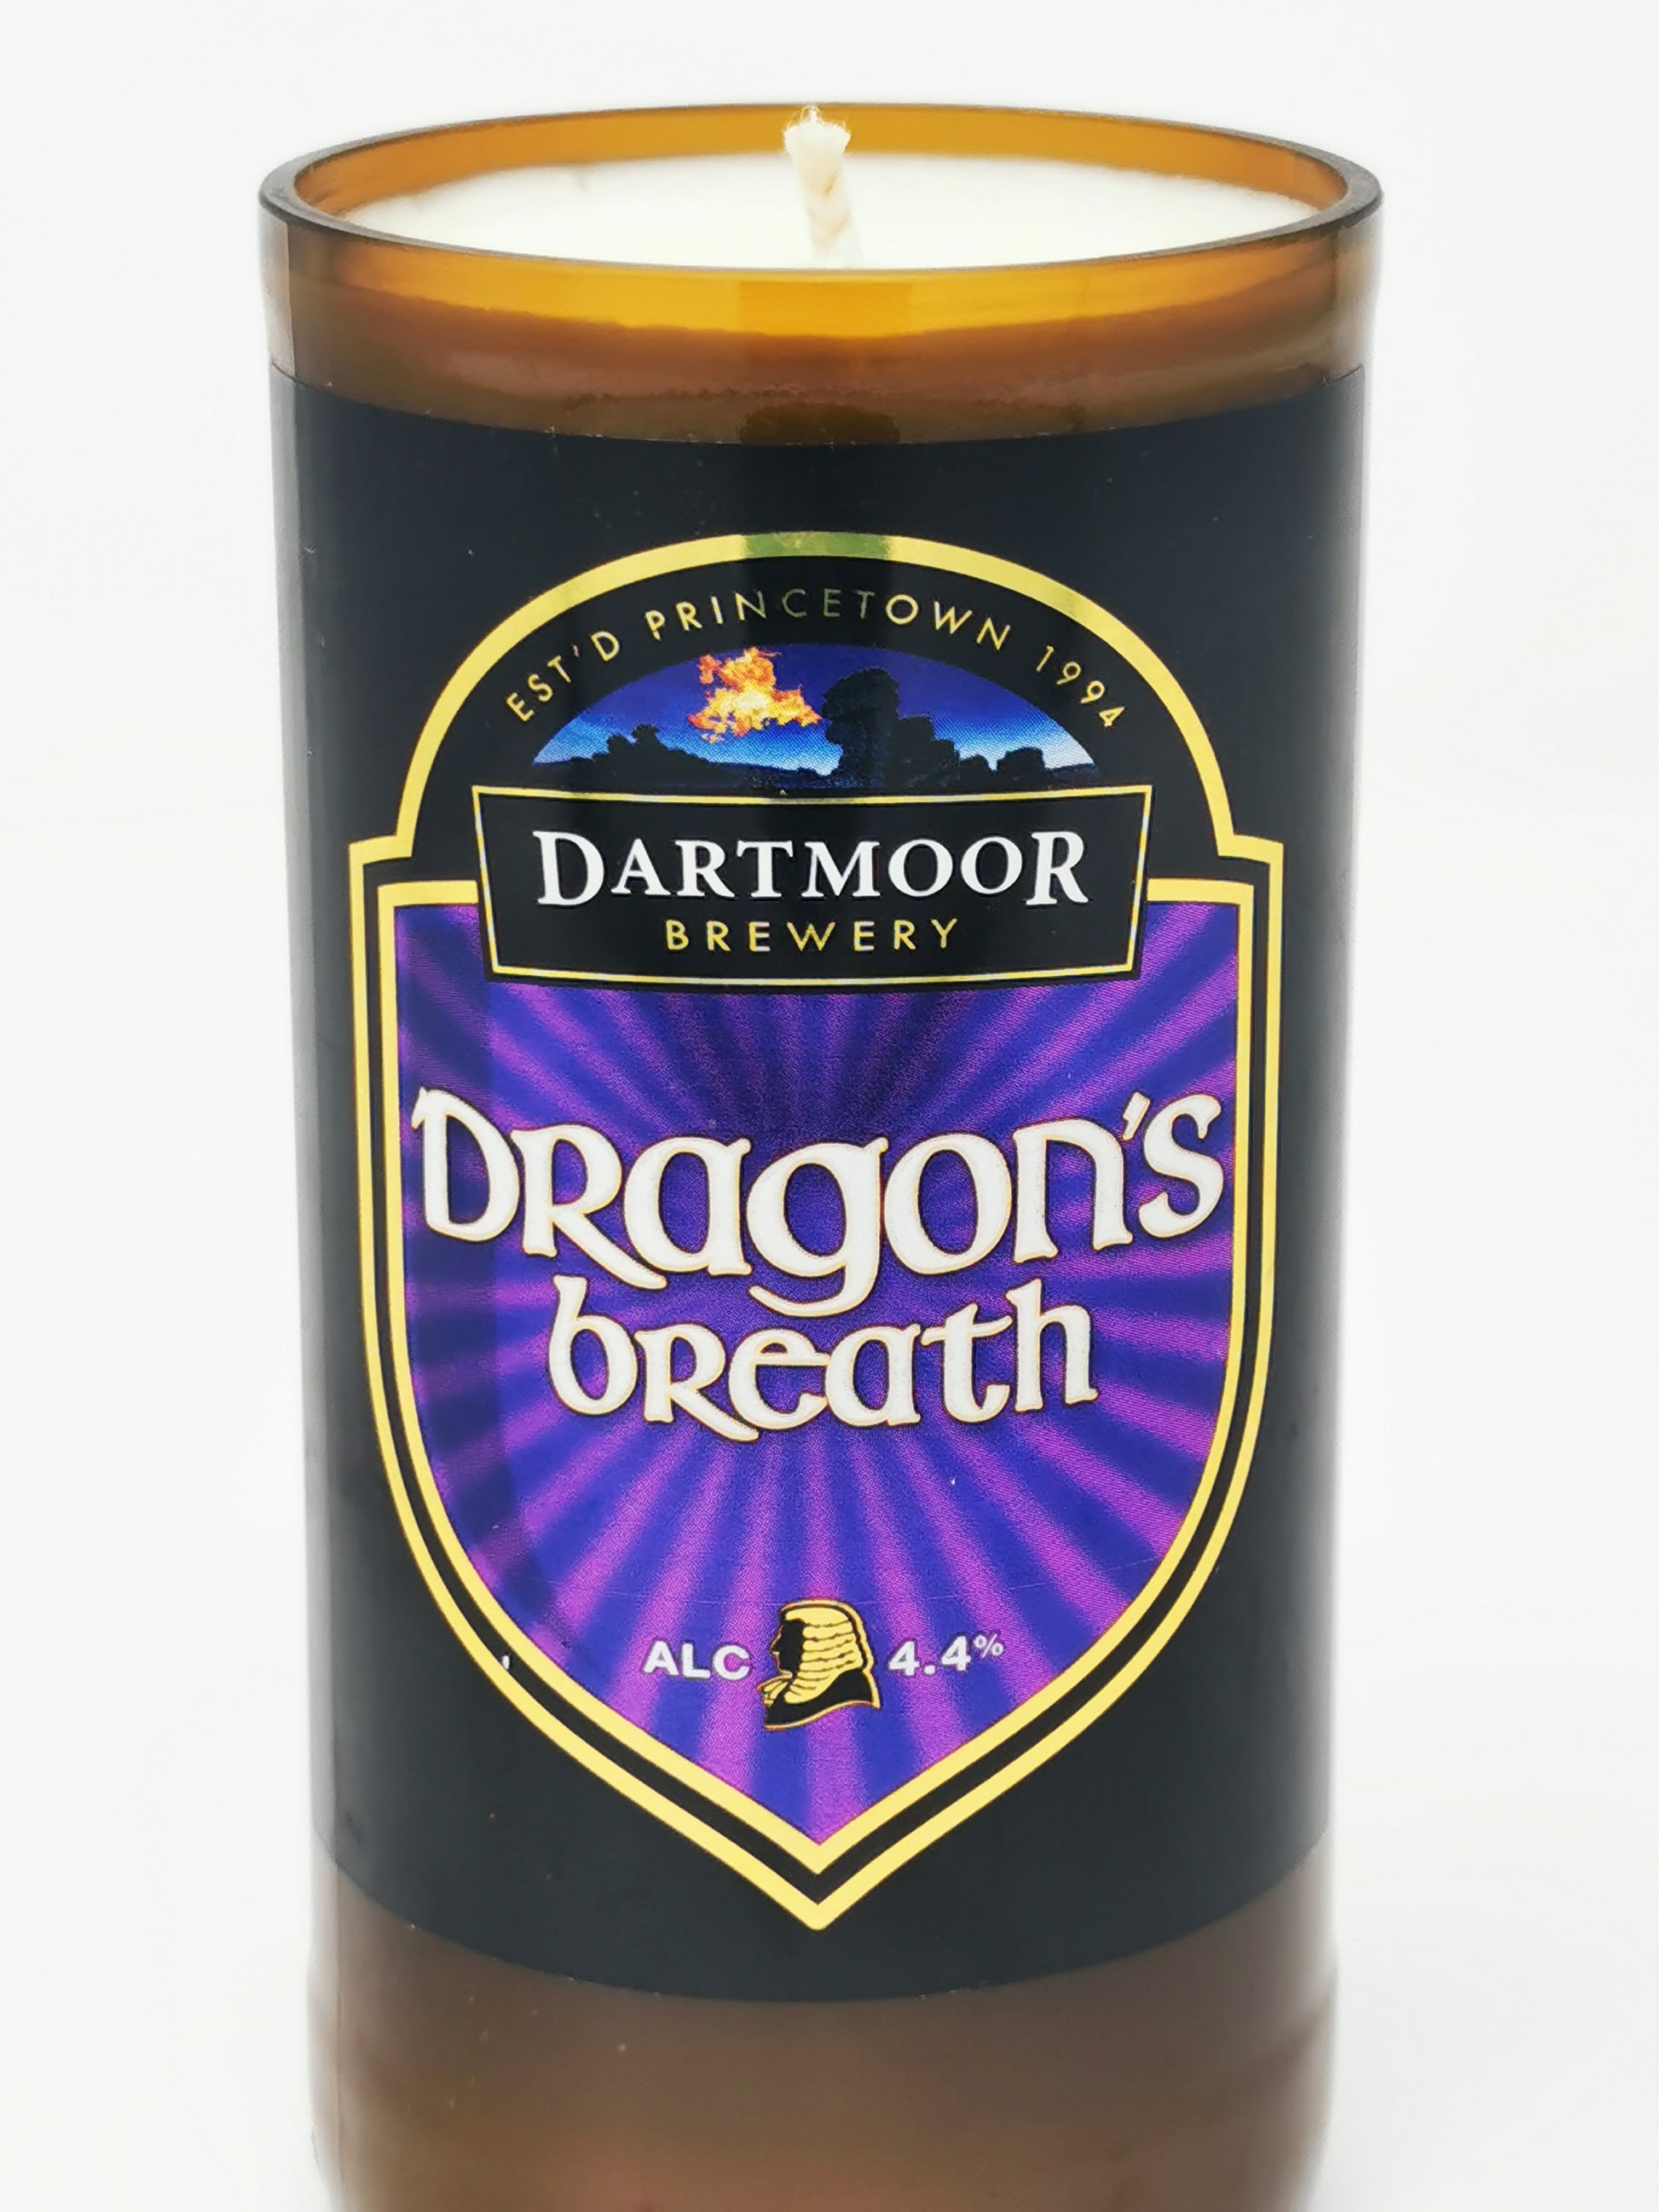 Dragons Breath Craft Beer Bottle Candle Beer & Ale Bottle Candles Adhock Homeware